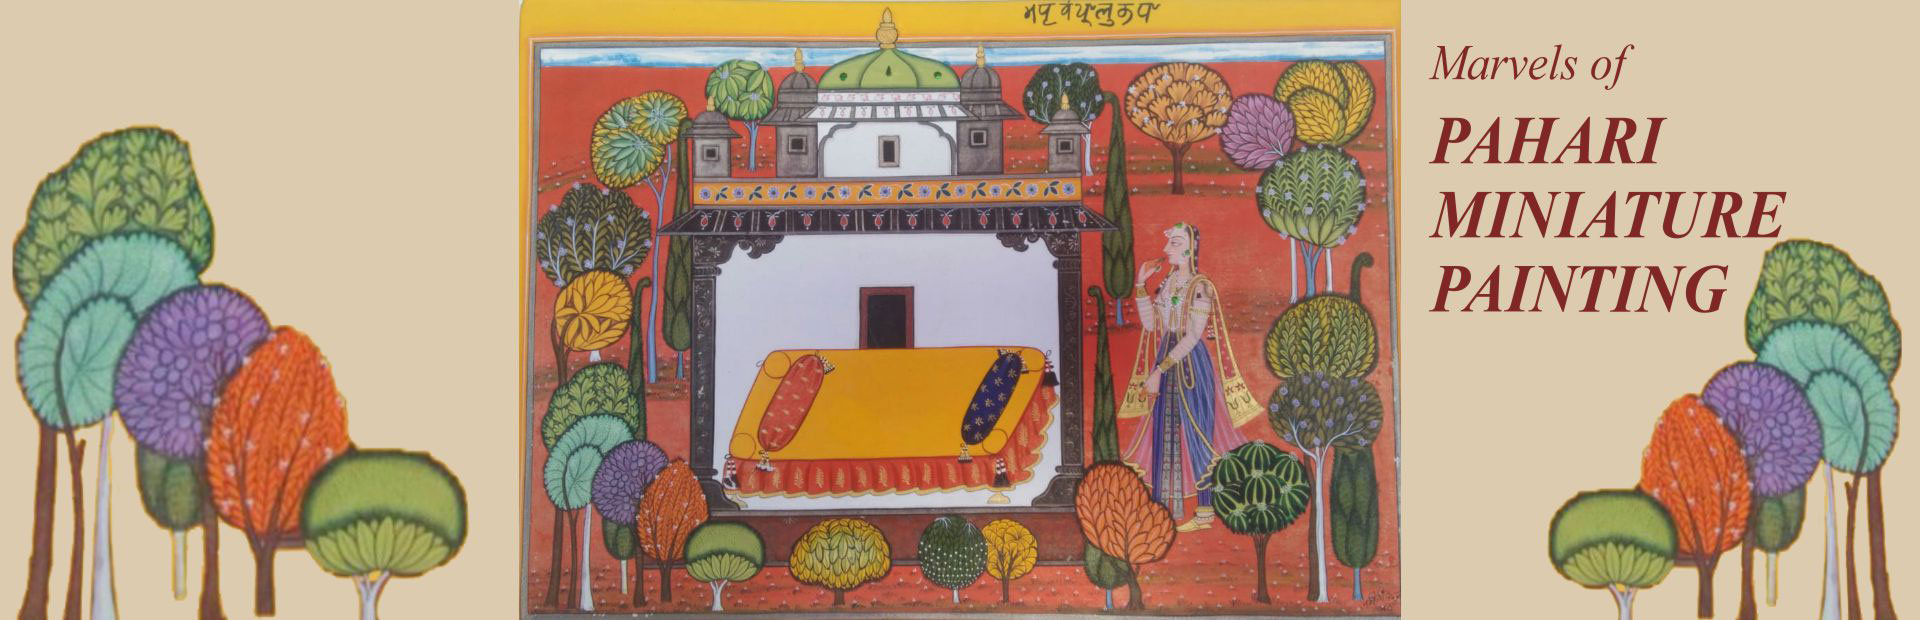 Pahari Miniature Painting